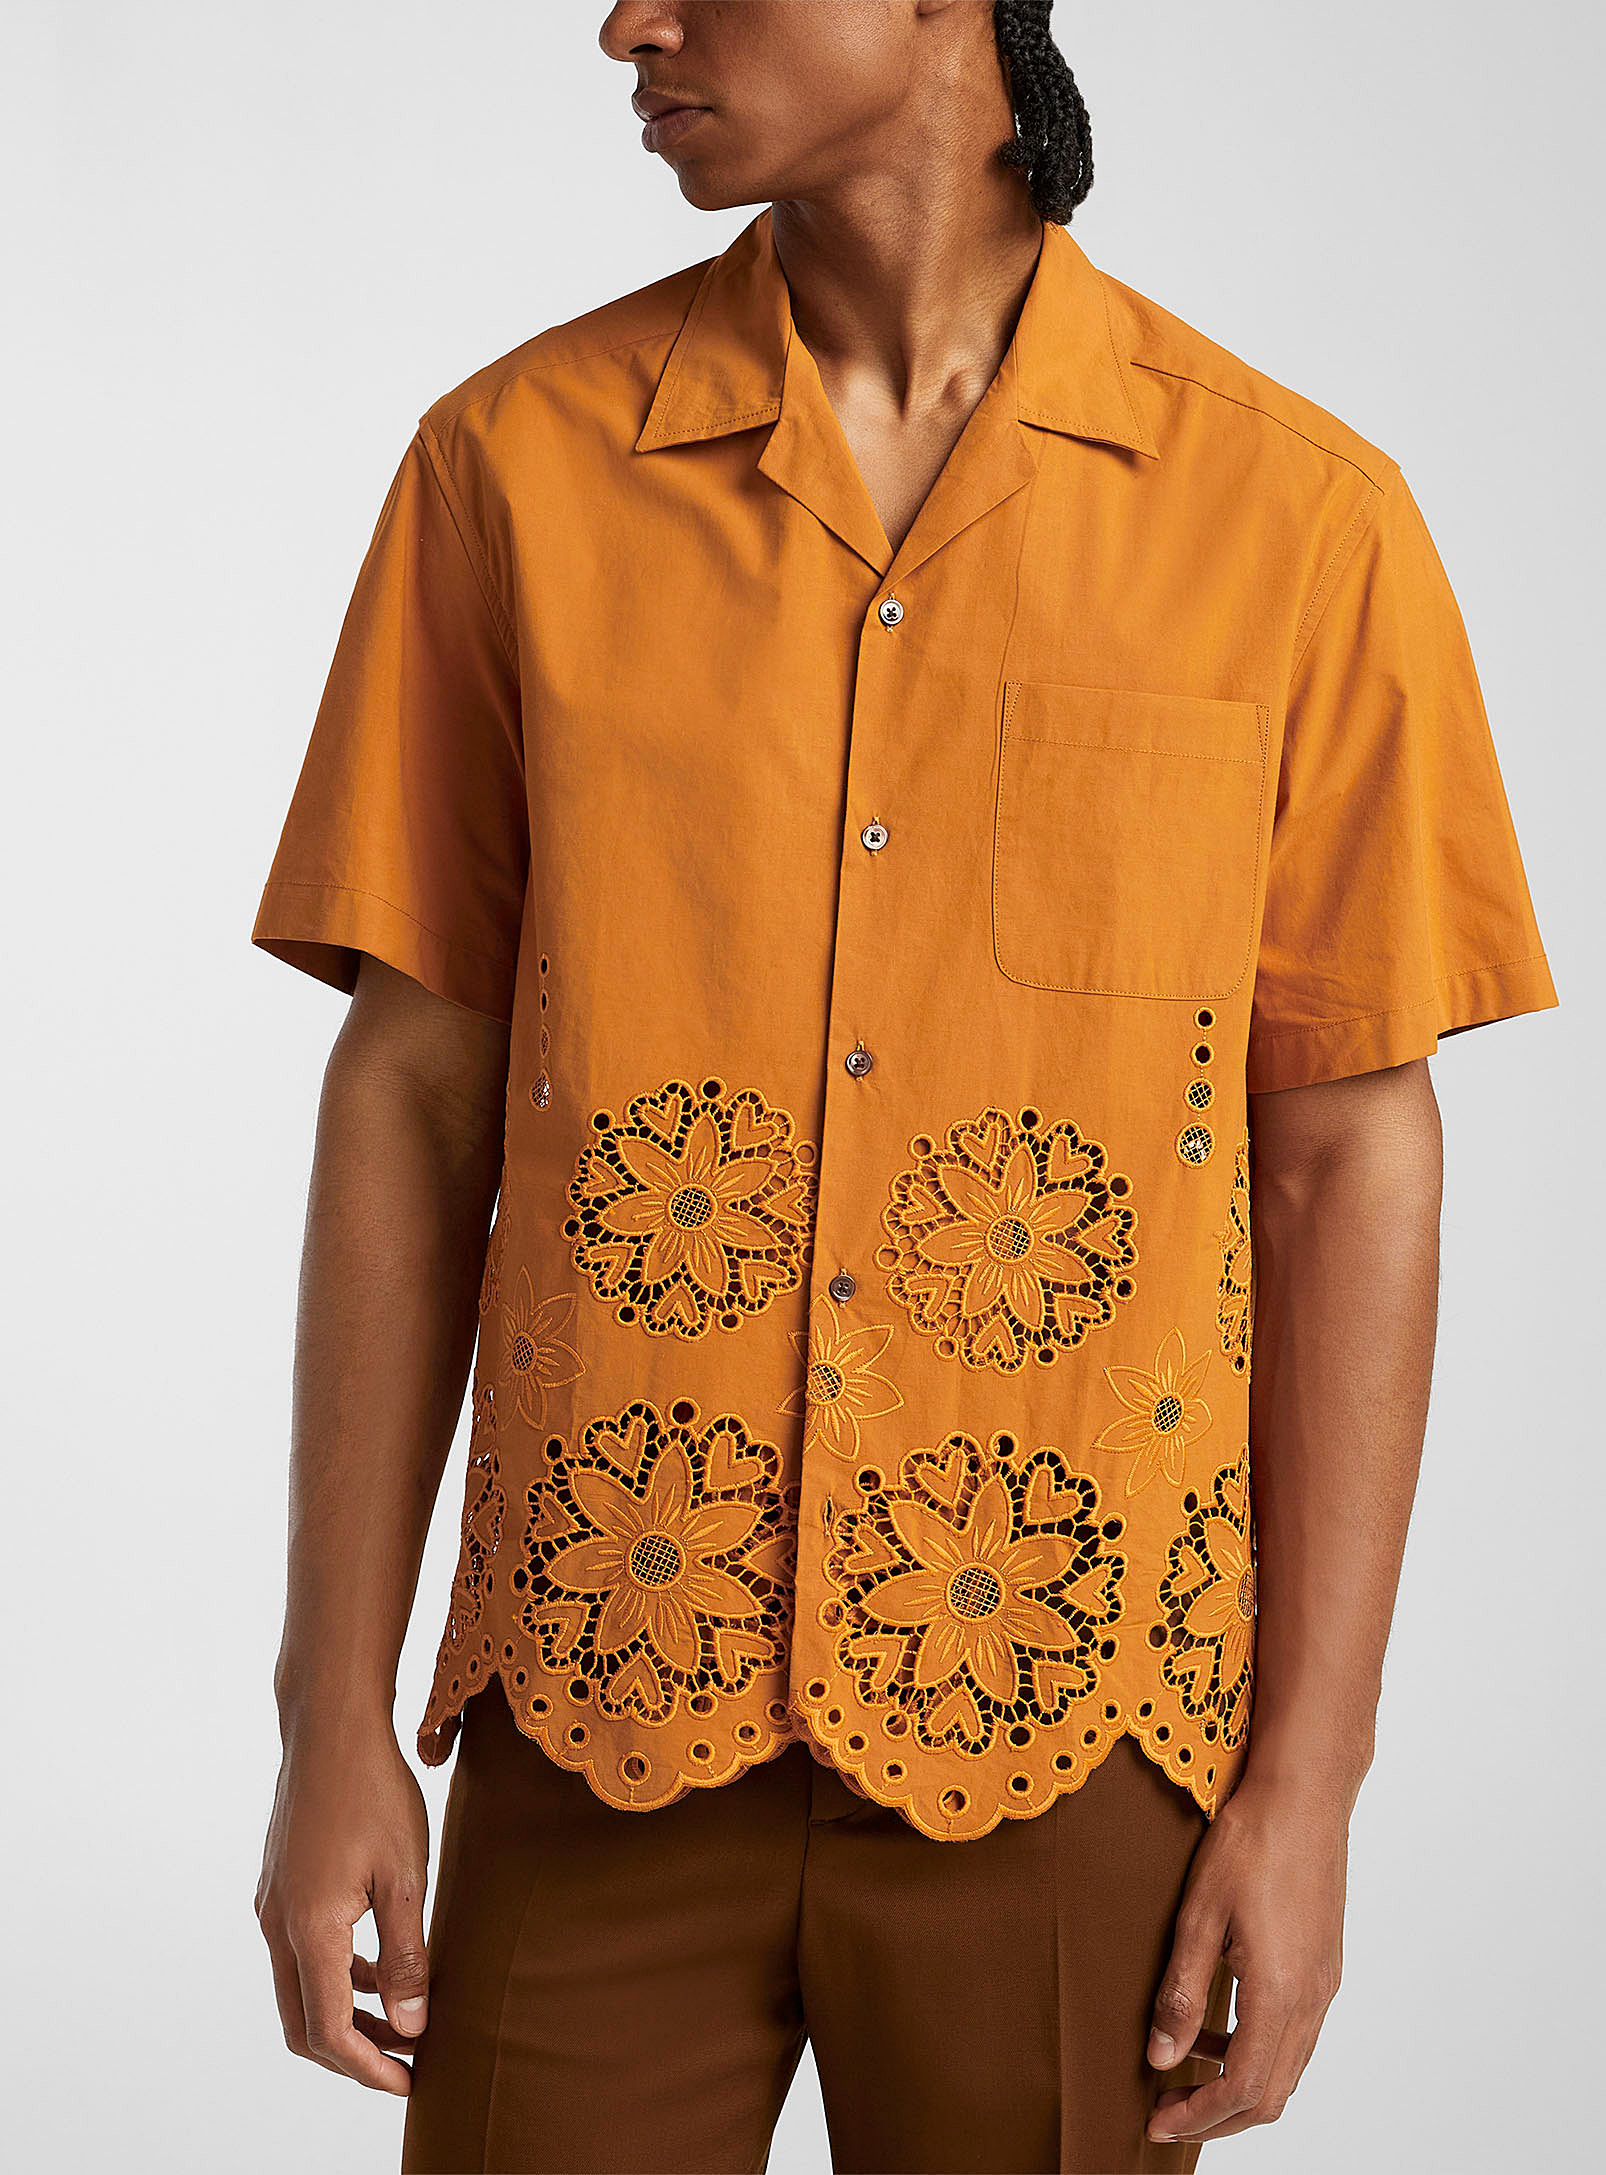 Cmmn Swdn - La chemise popeline dentelle florale